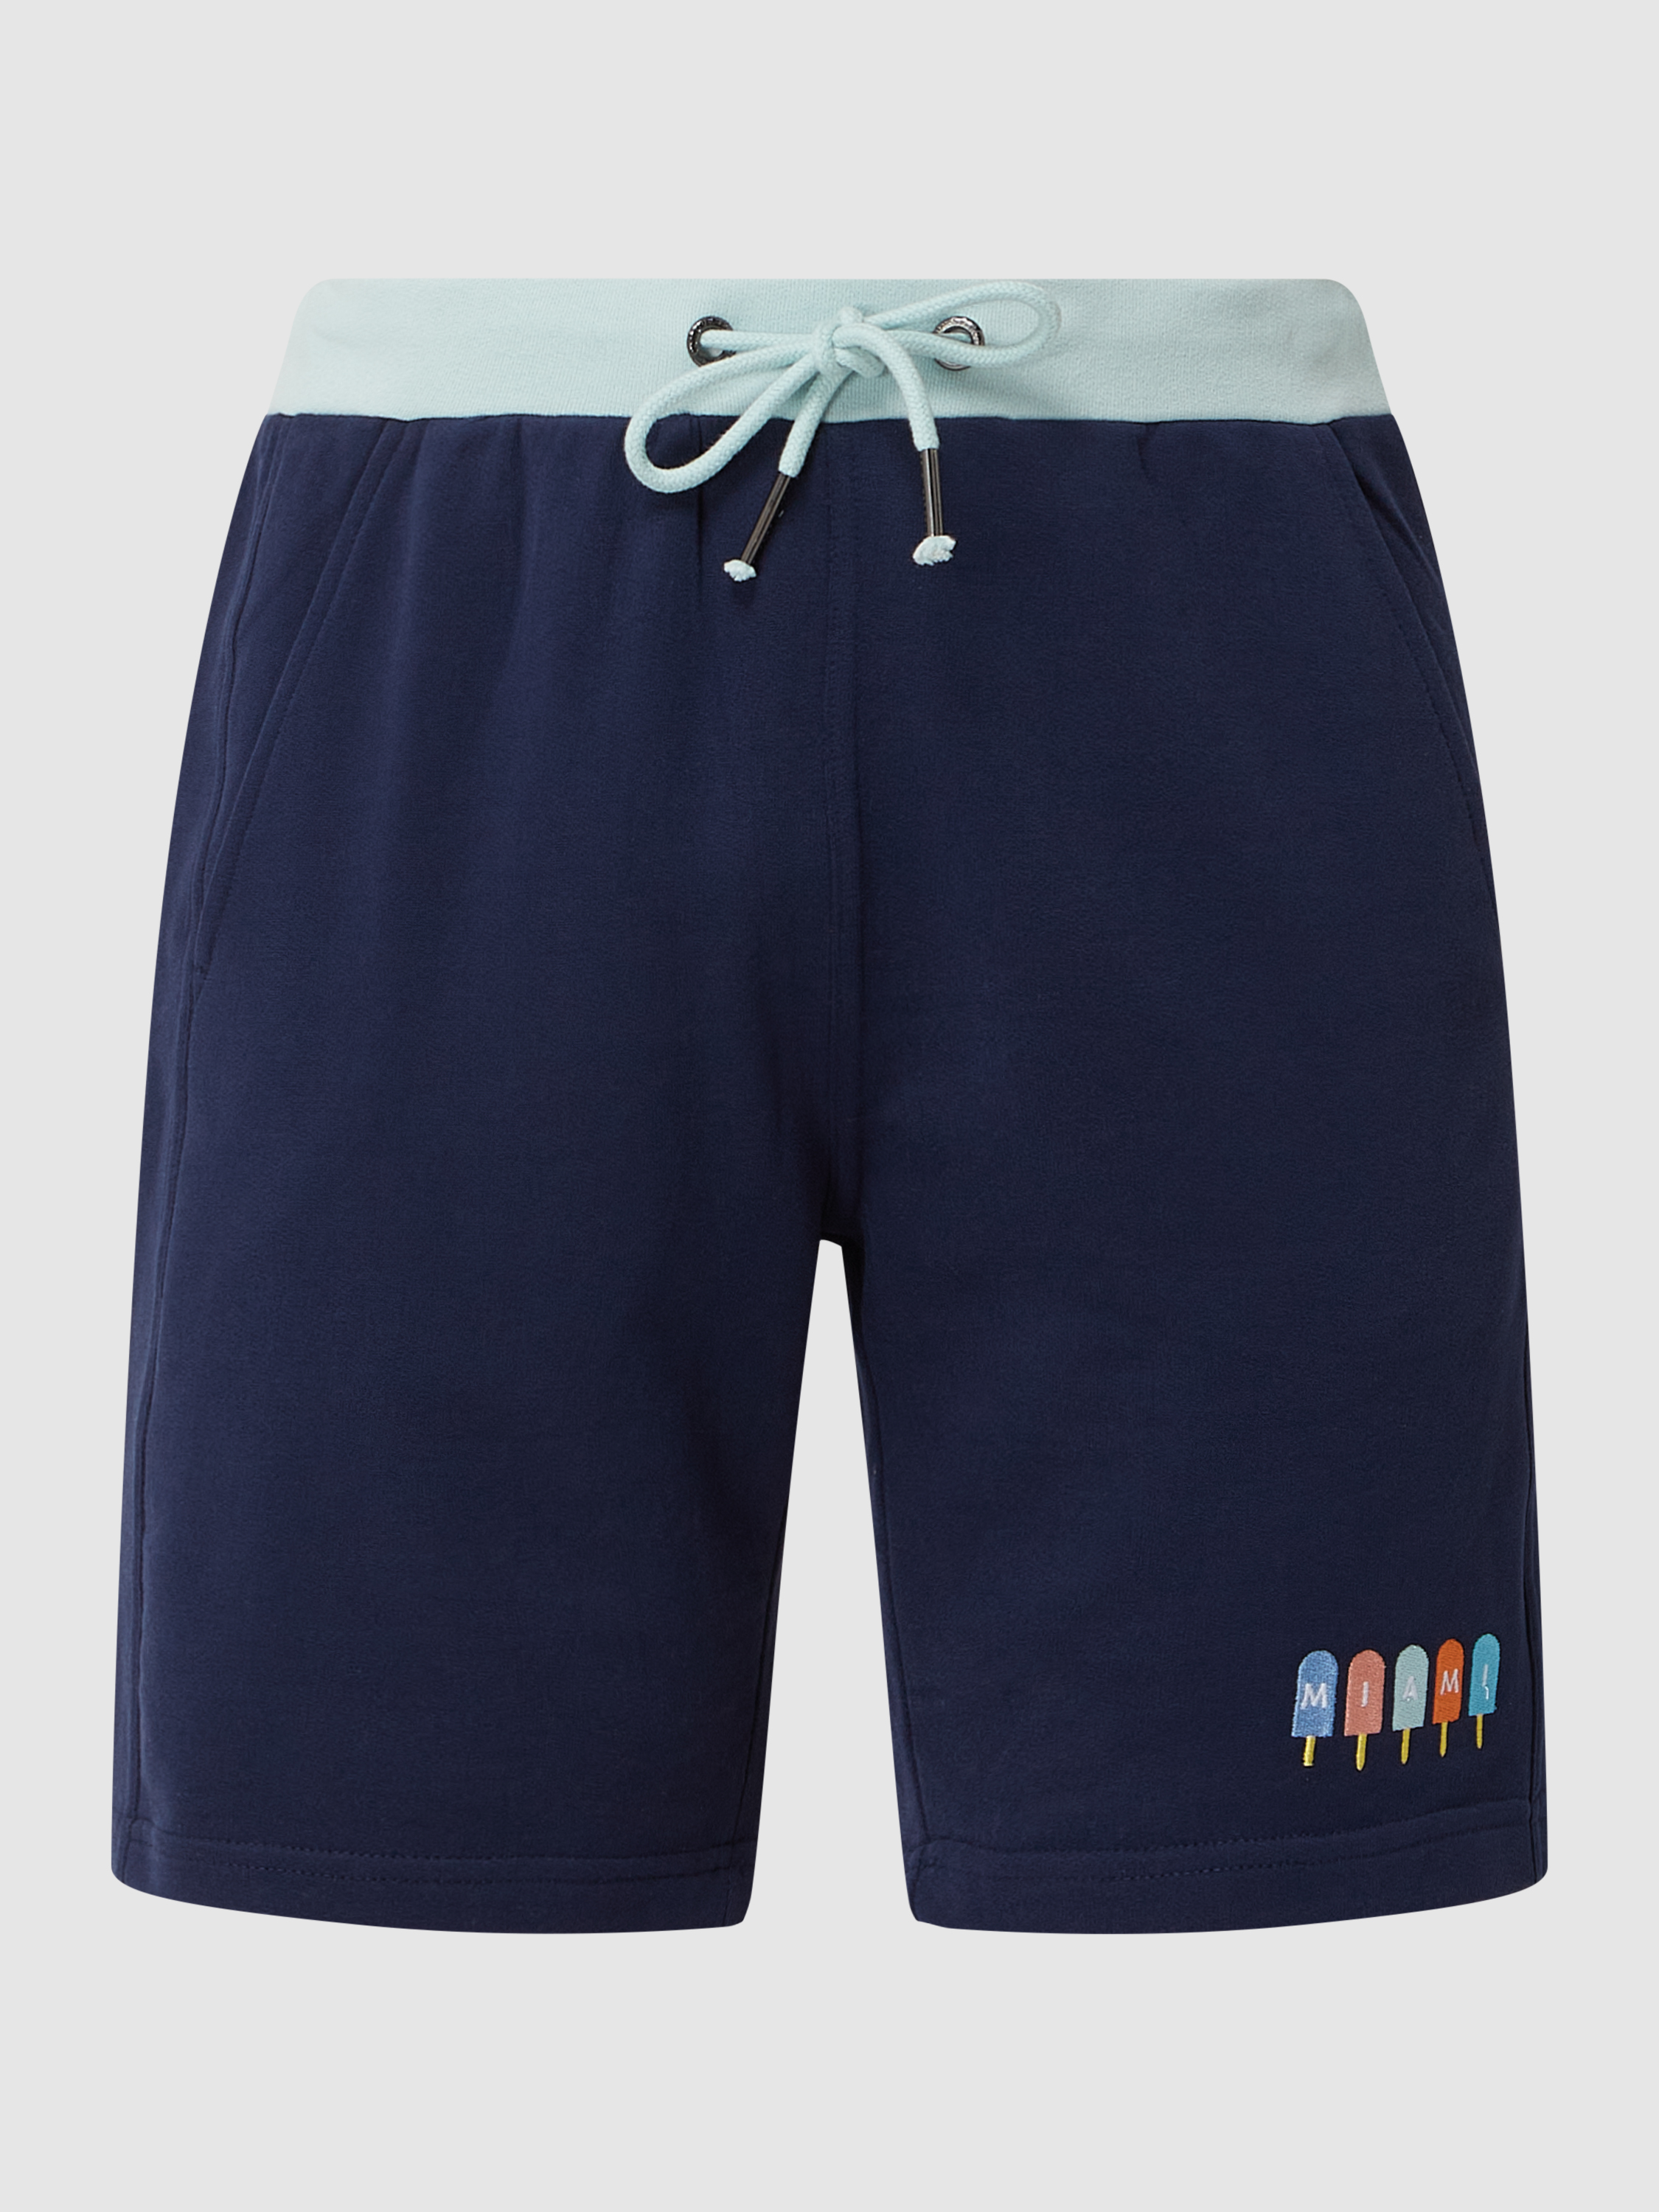 Трикотажные шорты мужские Colours & sons 1553803 синие L (доставка из-за рубежа)